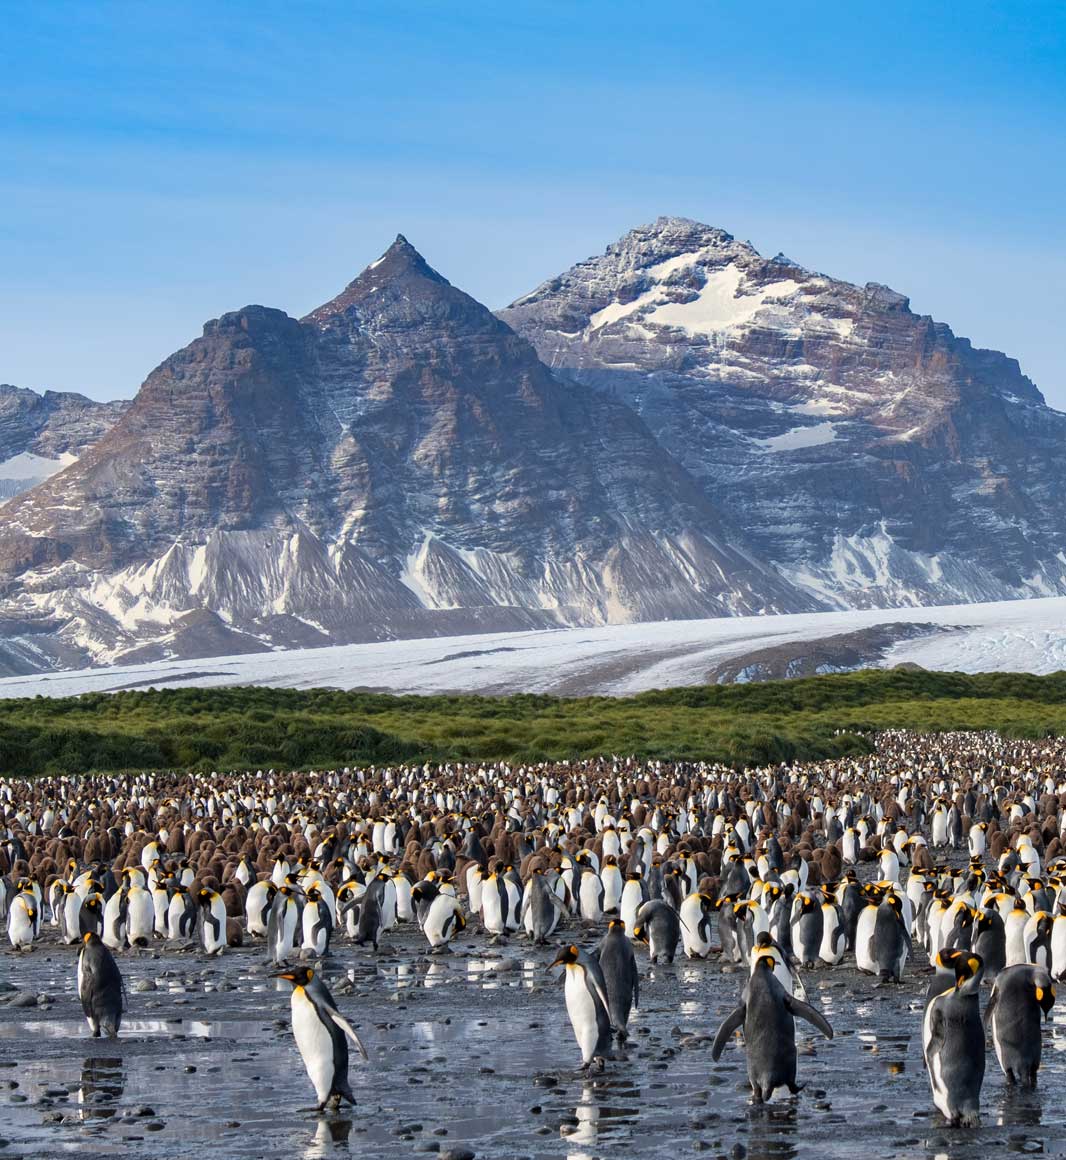 King penguins in South Georgia in Antarctica